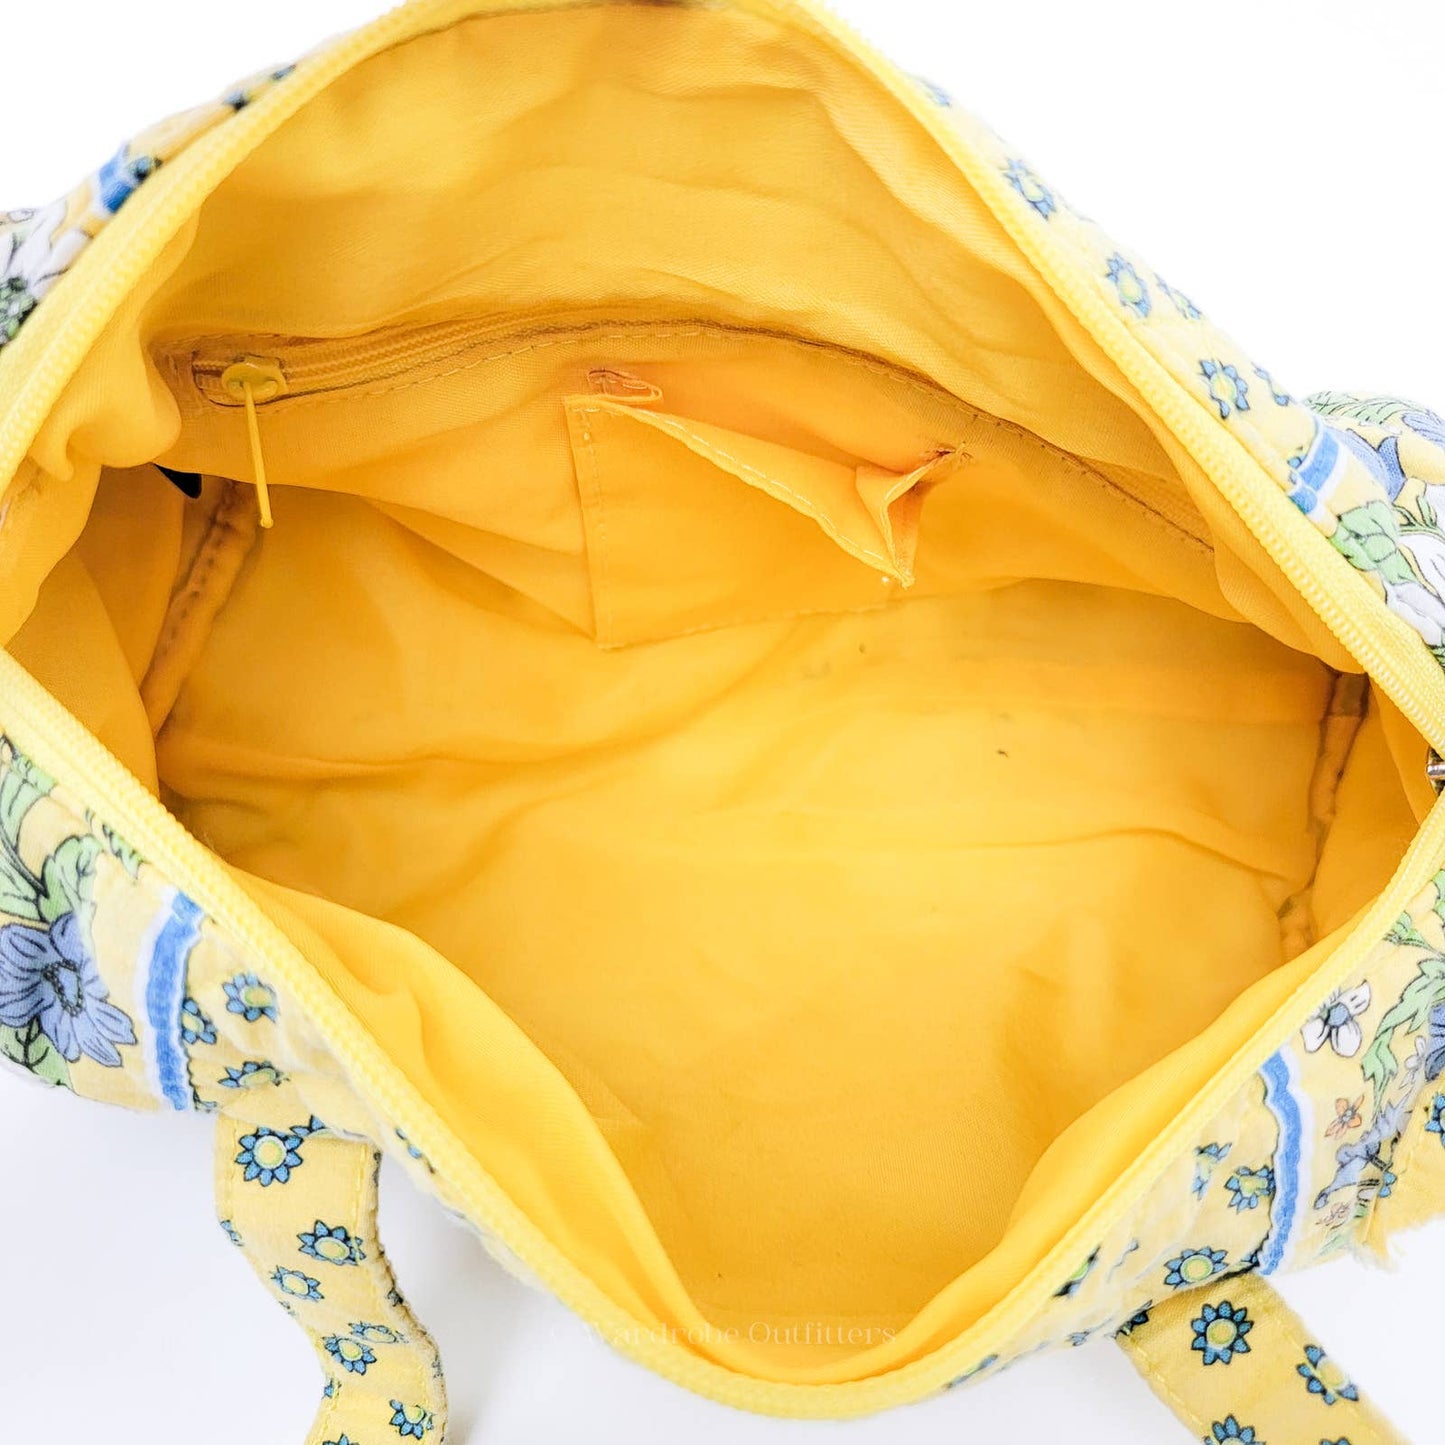 Yellow Spring Paisley Floral Print Shoulder Tote Duffel Bag